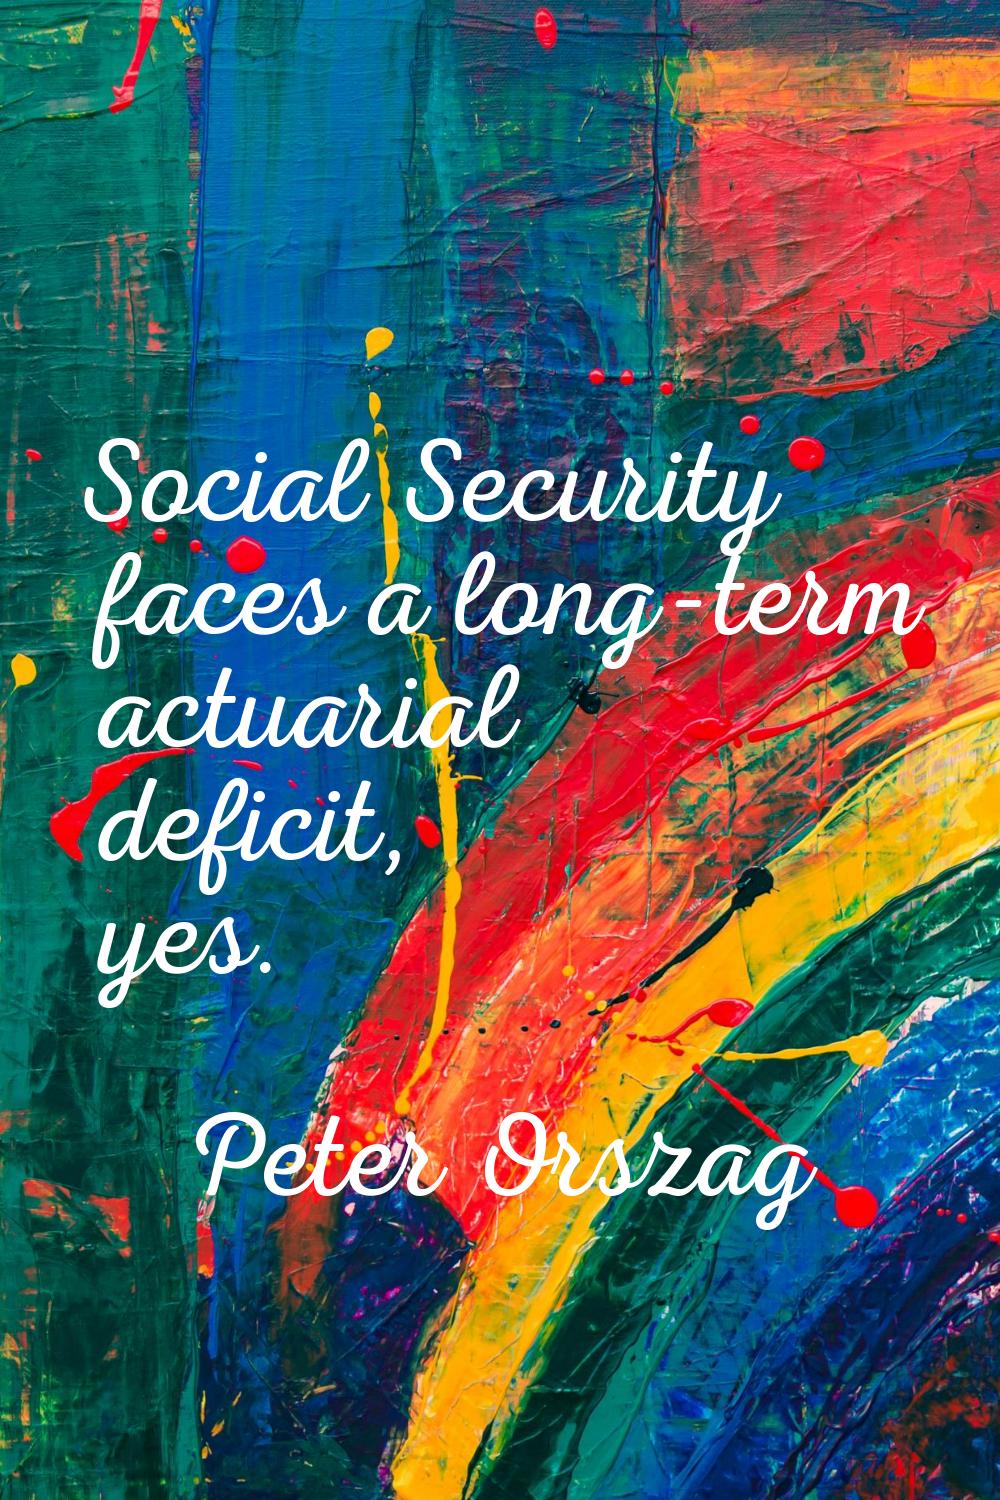 Social Security faces a long-term actuarial deficit, yes.